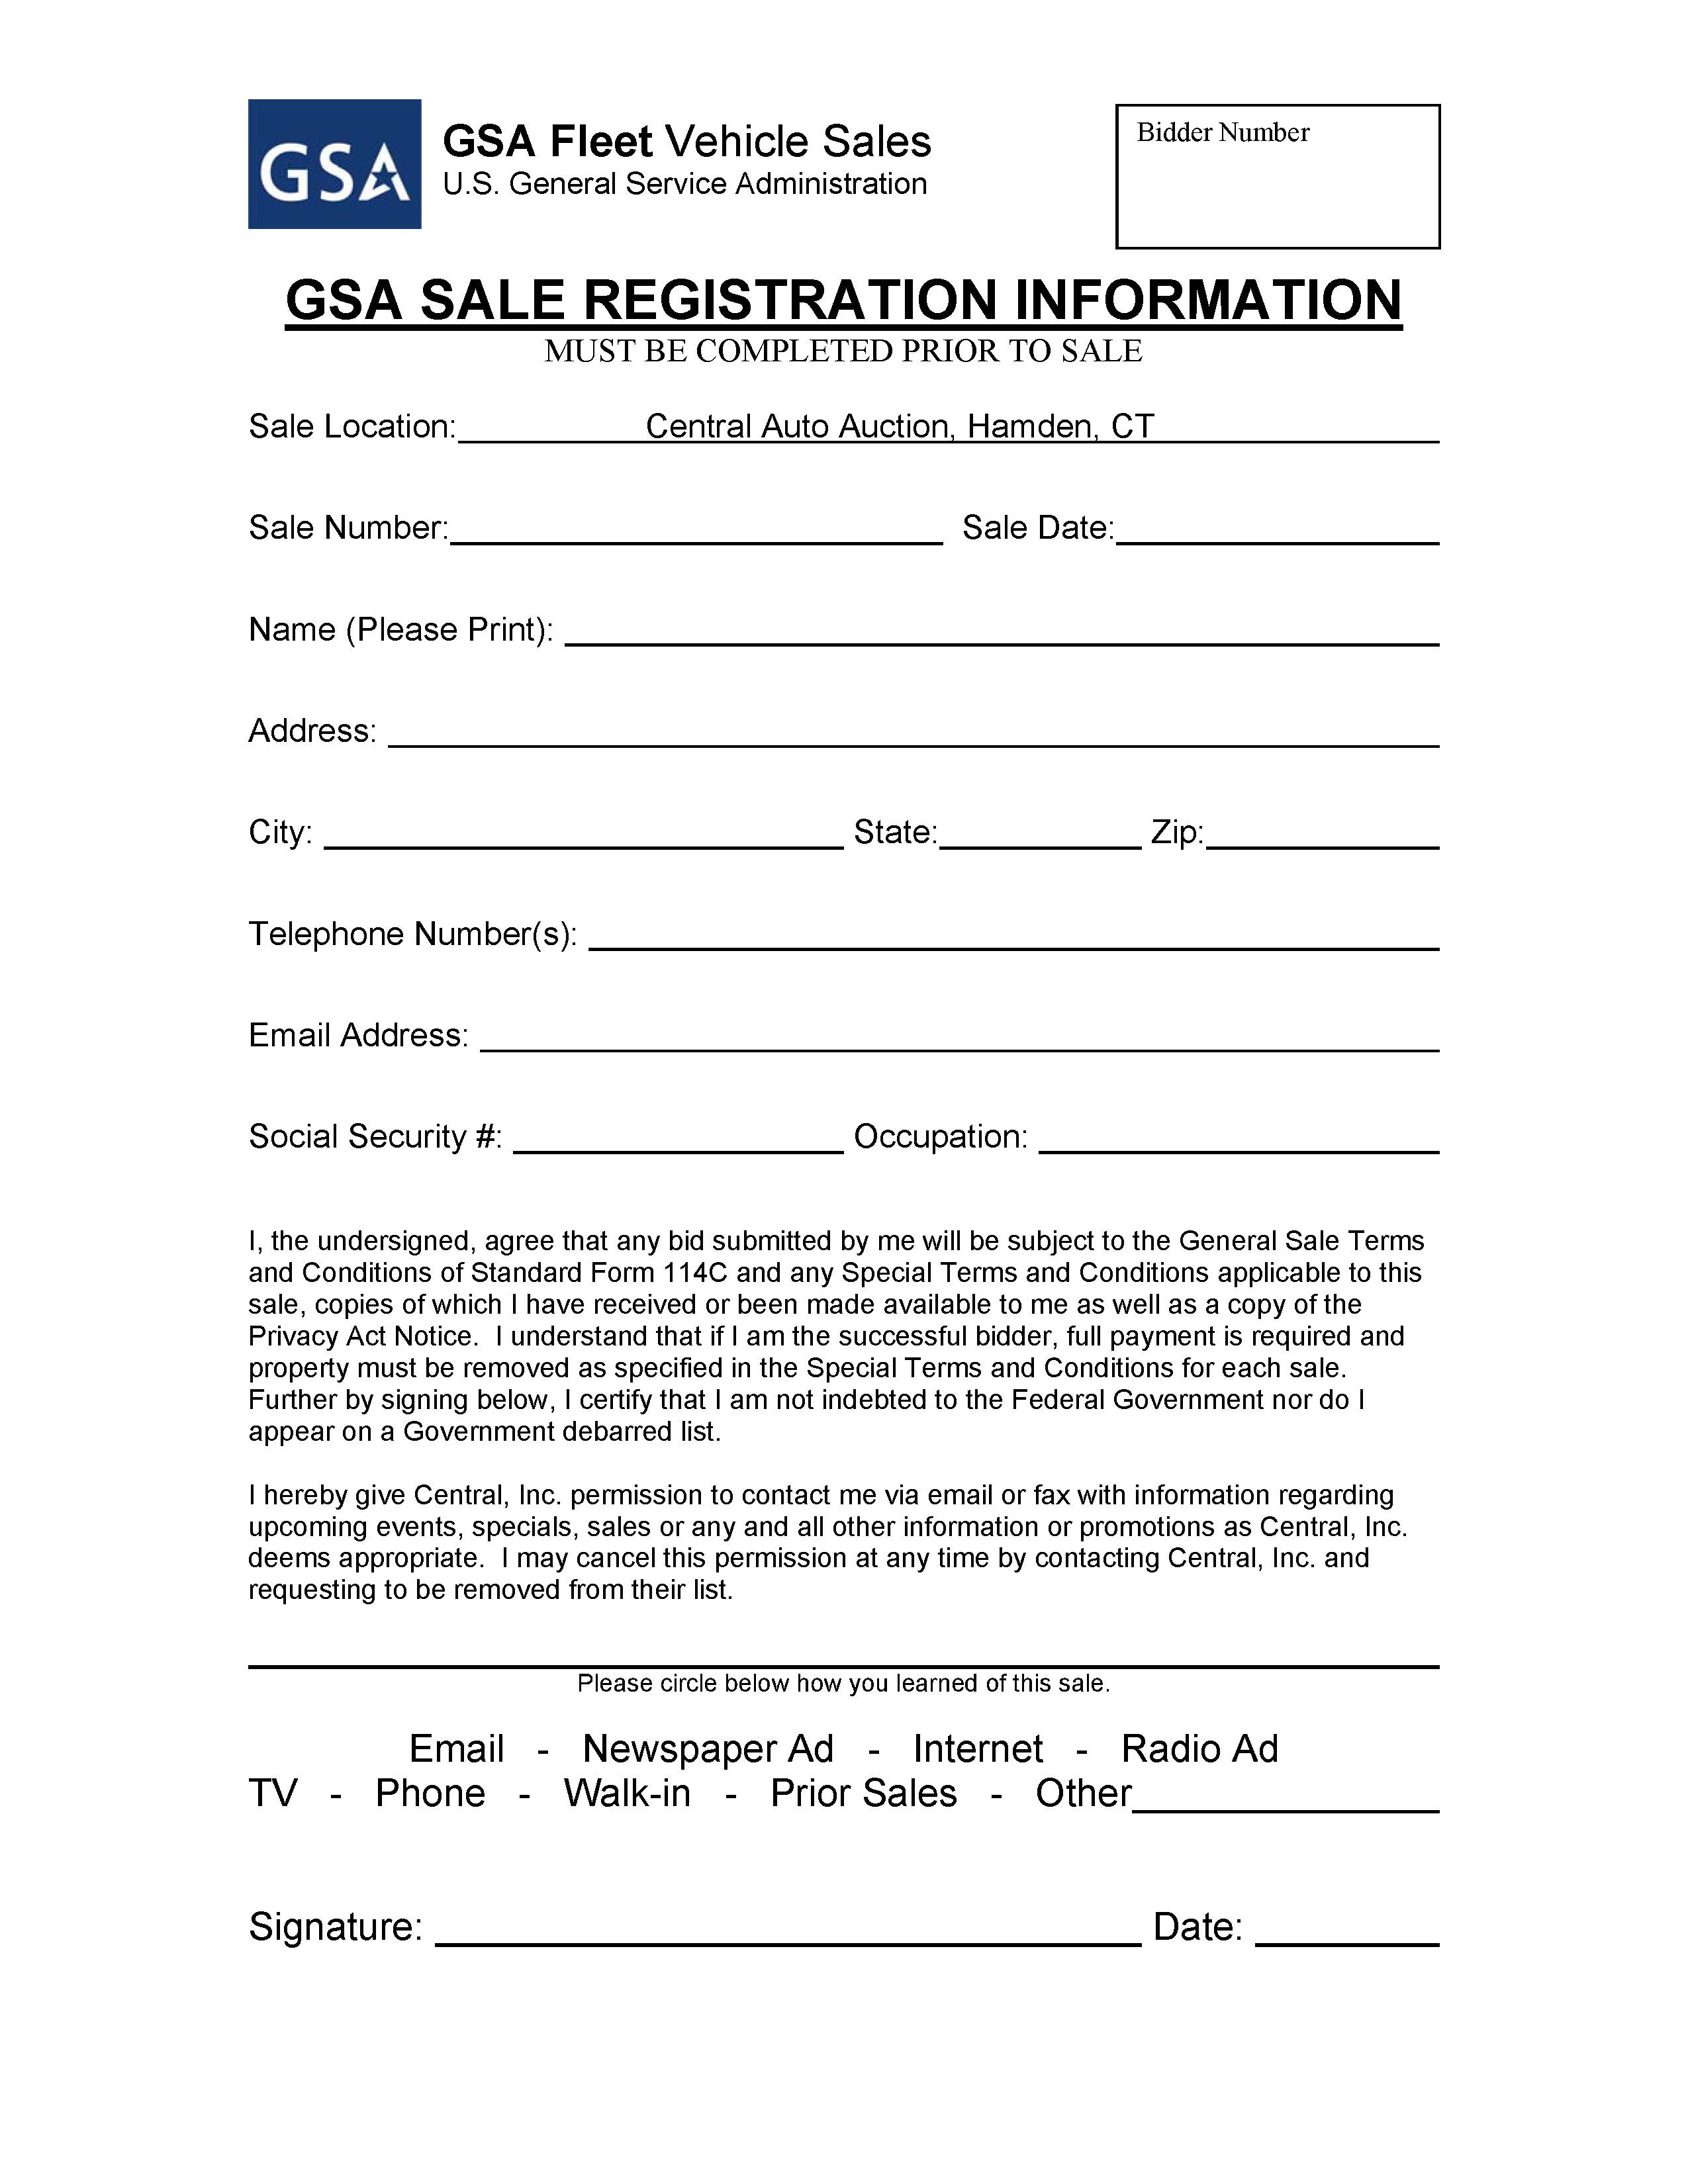 GSA sign up form